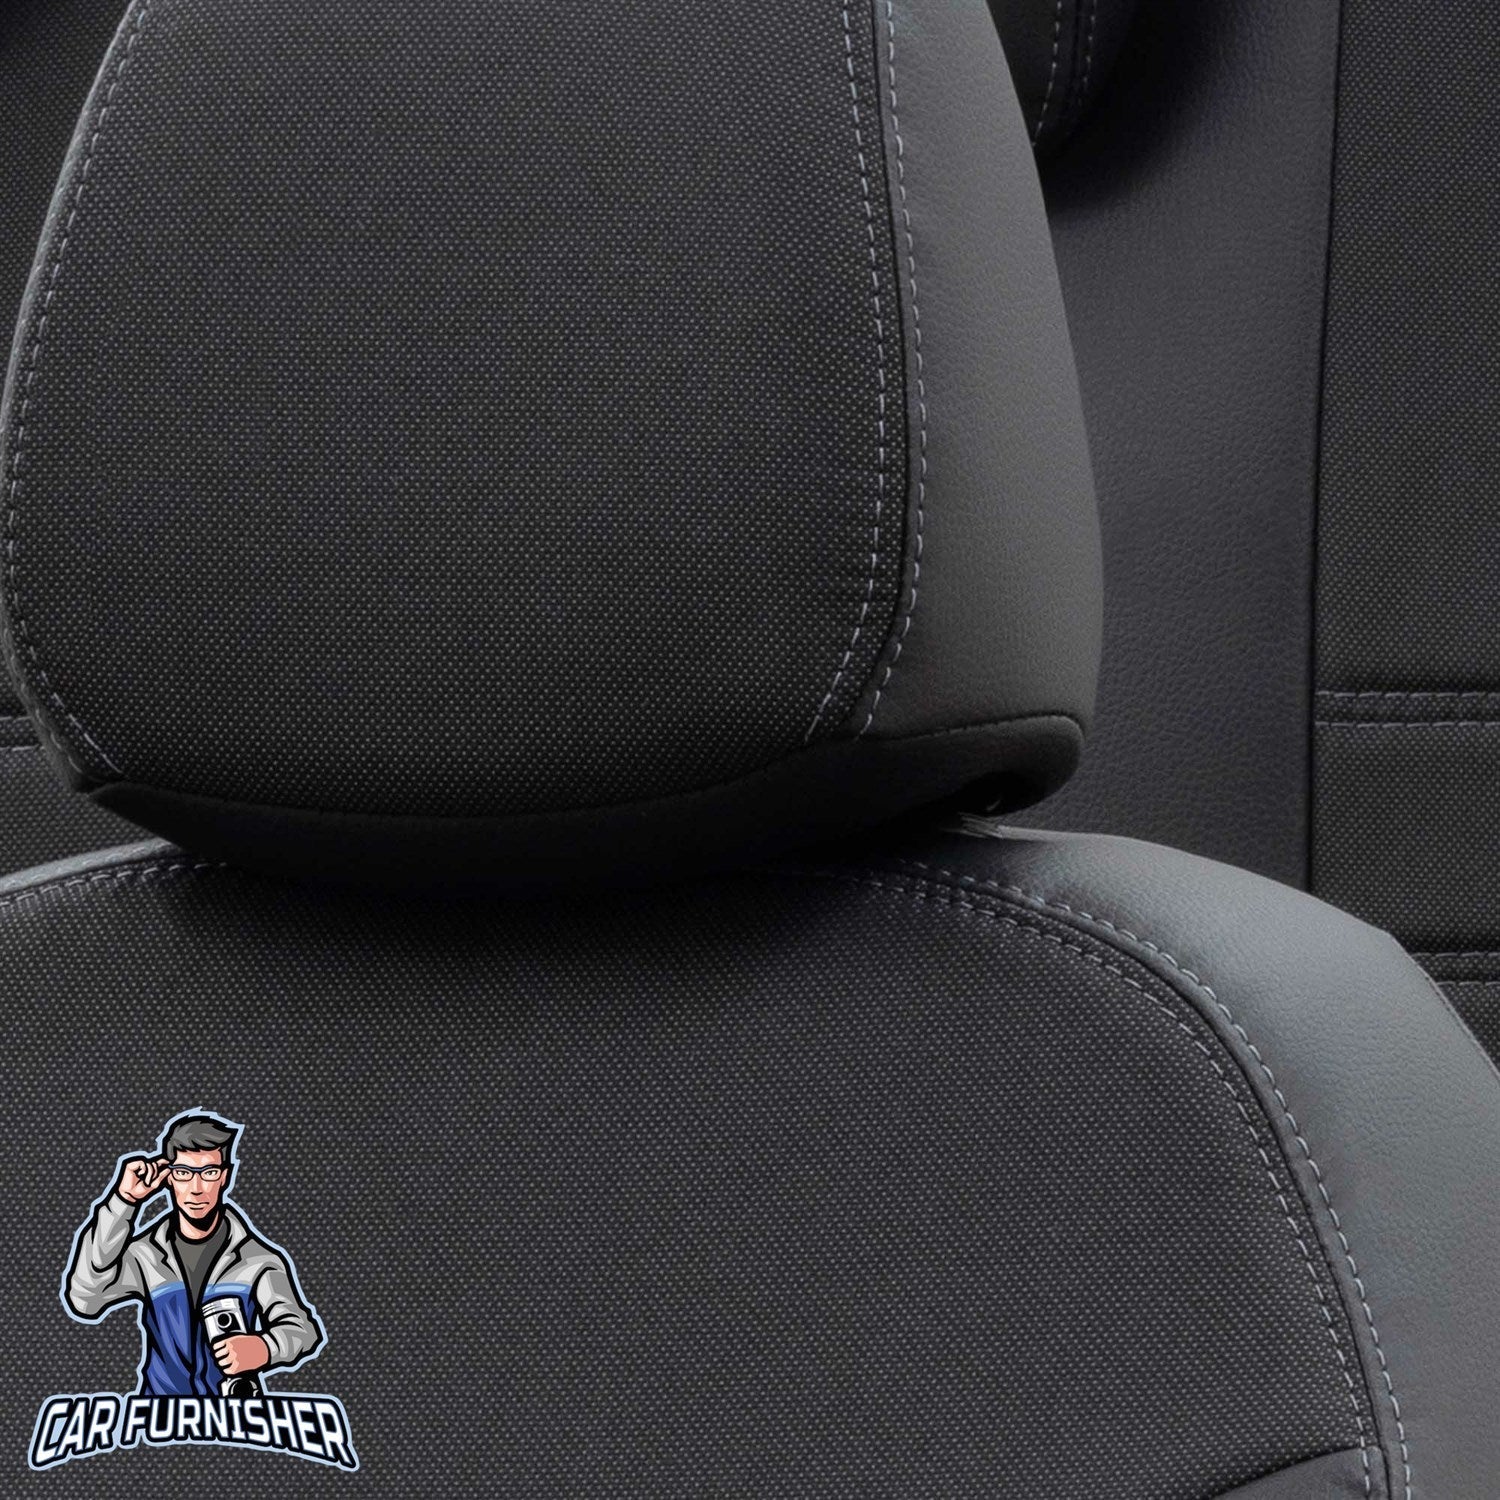 Seat Cordoba Seat Covers Paris Leather & Jacquard Design Black Leather & Jacquard Fabric